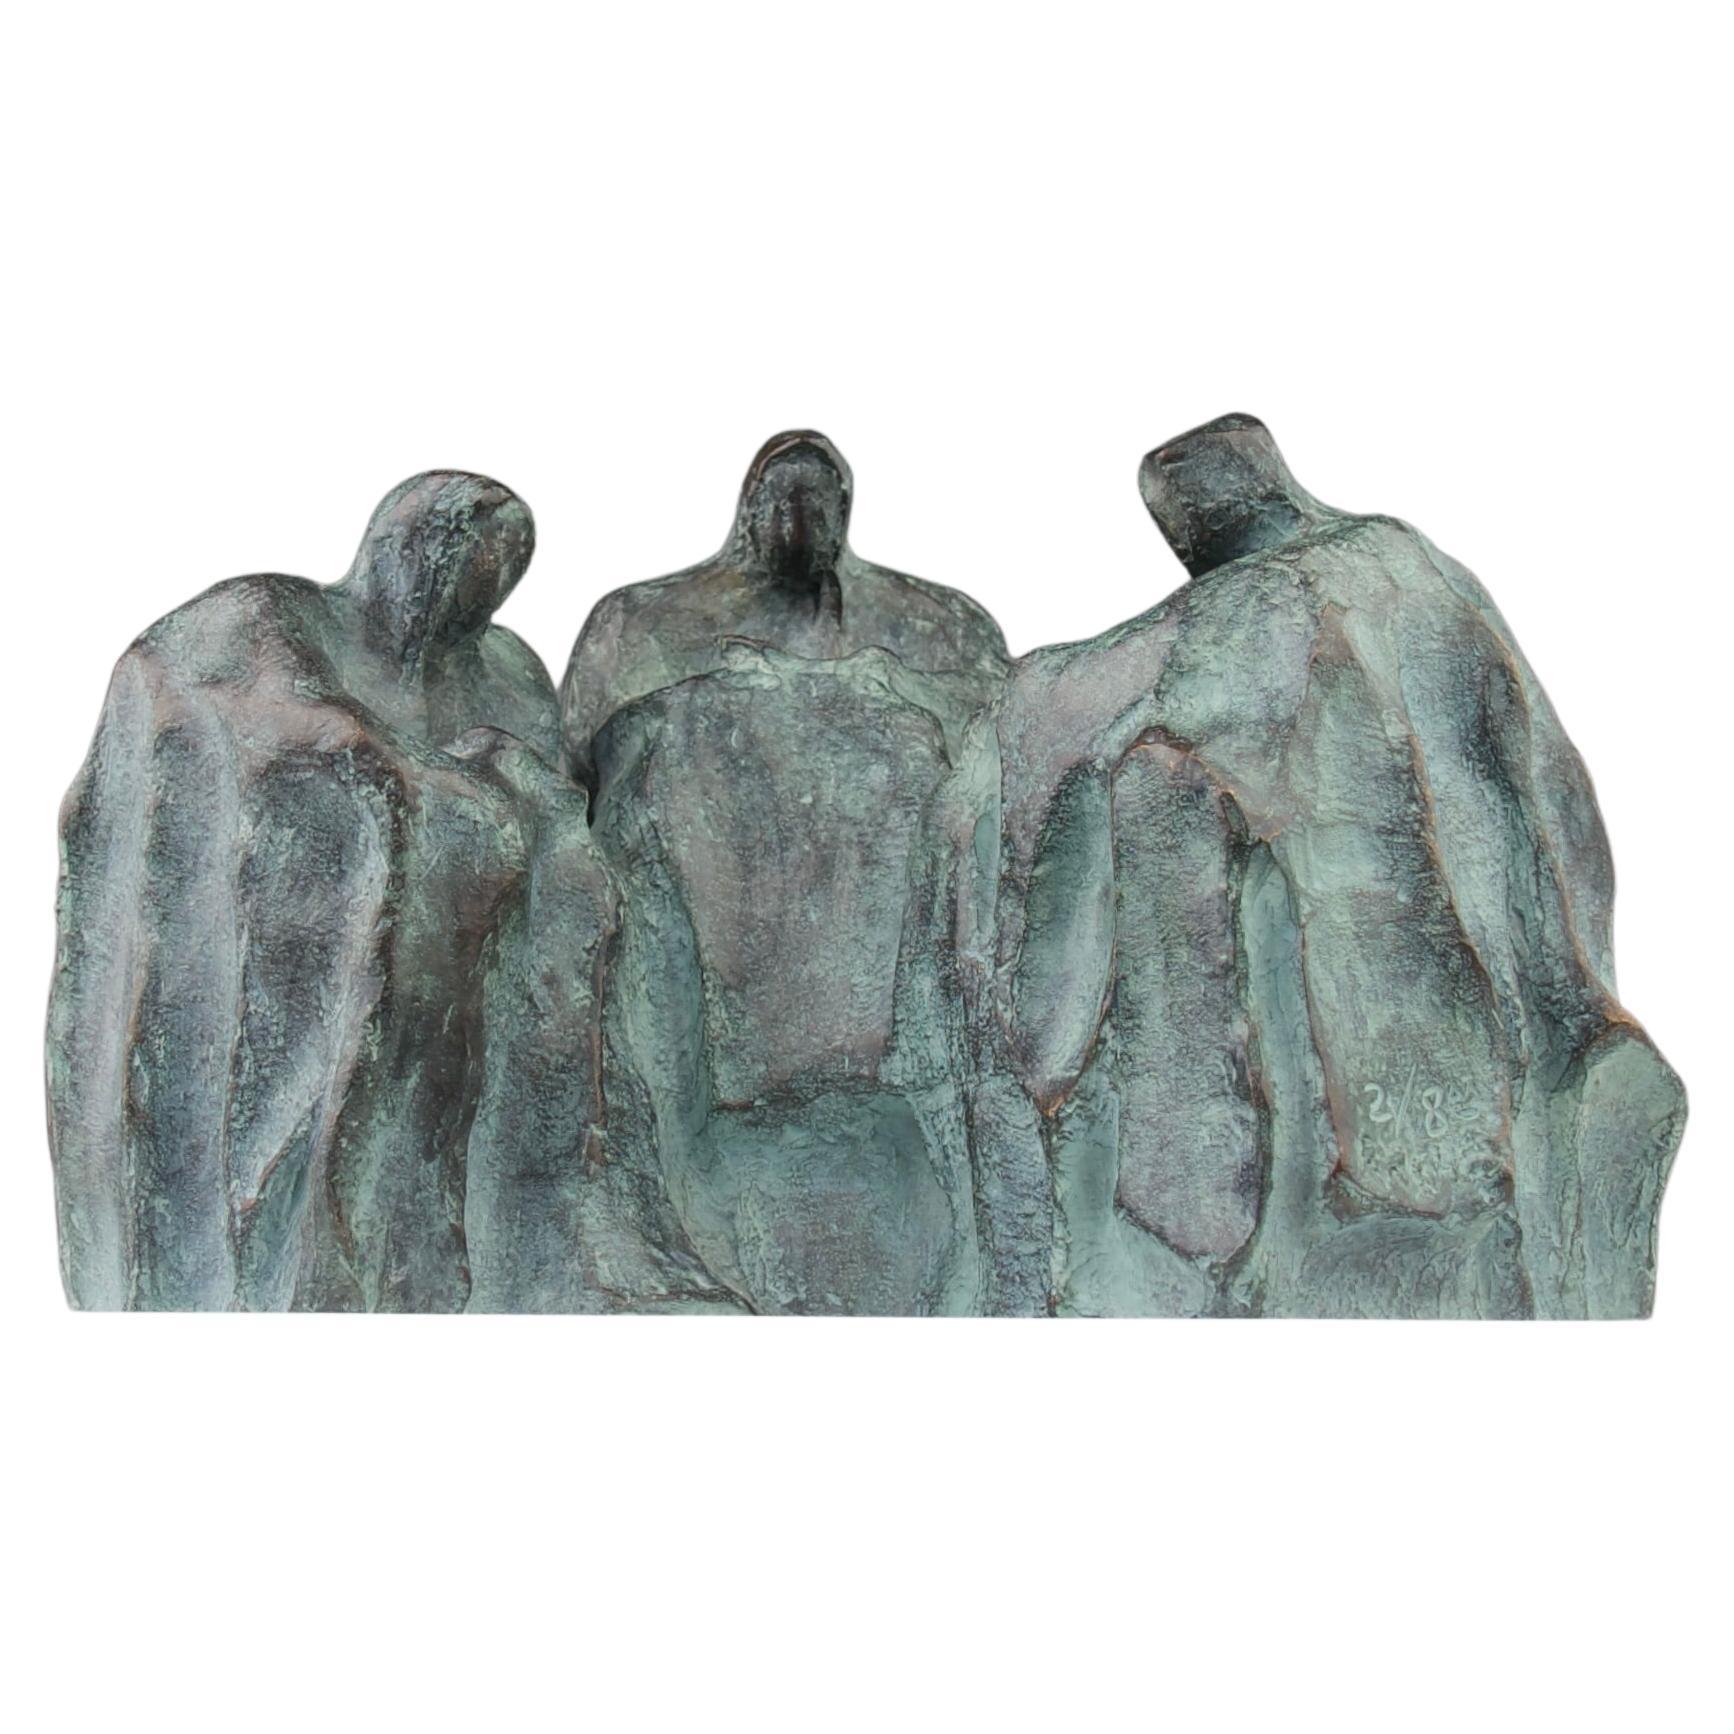 Rachel x Chapon Foundry, the Three Readers Sculpture, Bronze, France, 2000s